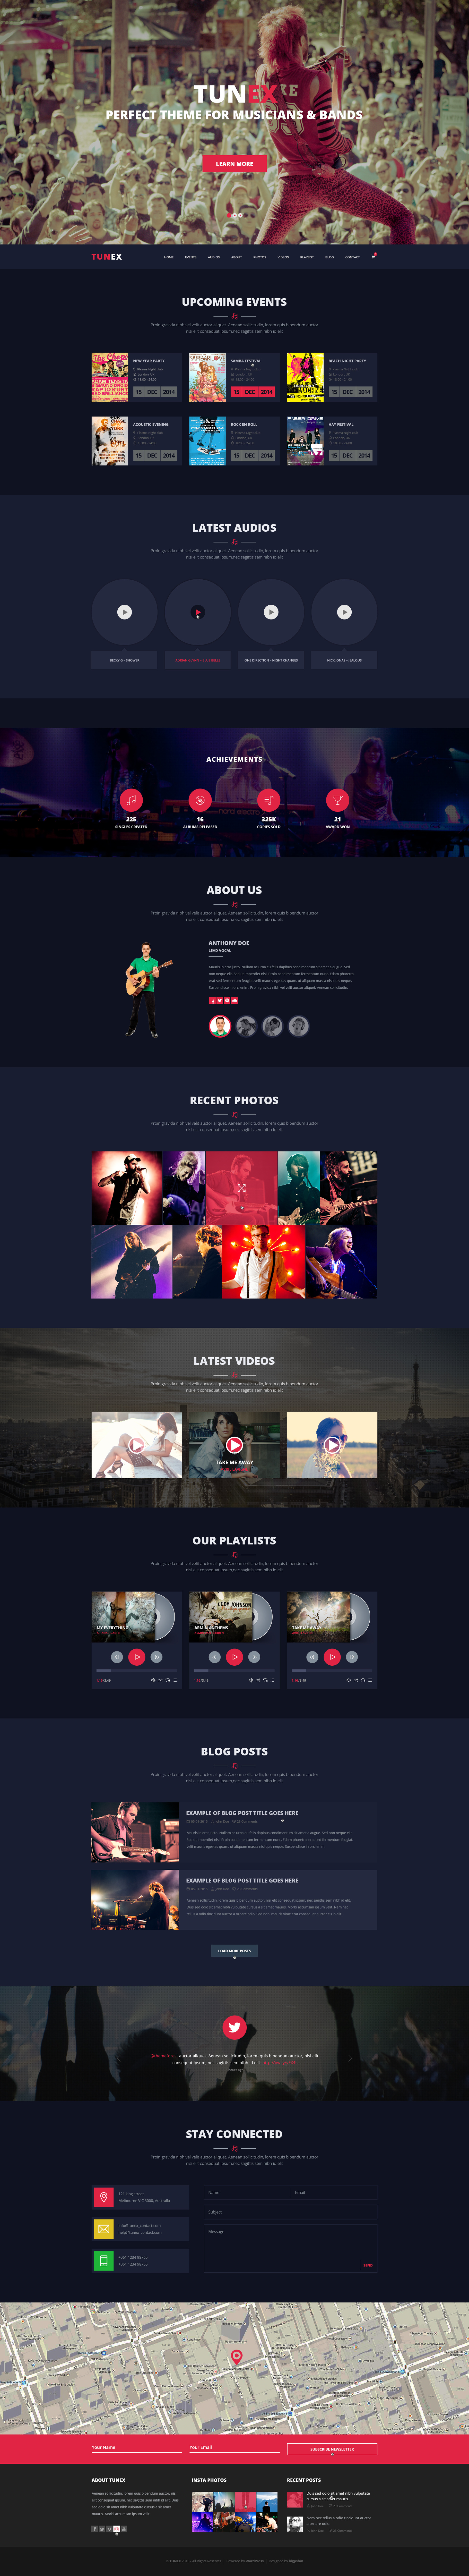 TUNEX - Music & Entertainment PSD Template